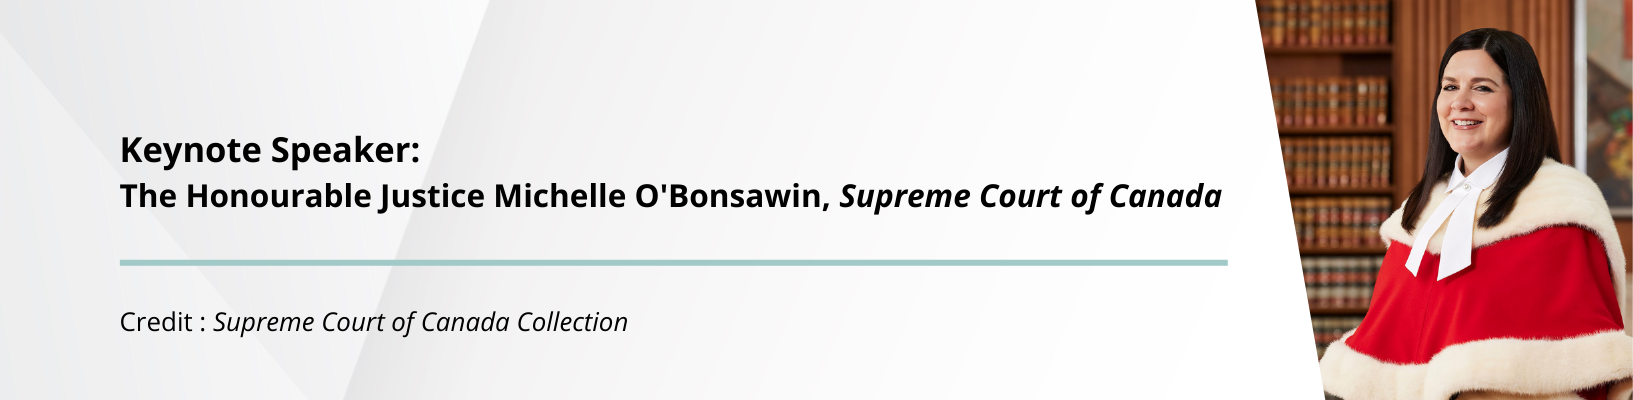 The Hon. Justice Michelle O'Bonsawin, Supreme Court of Canada Profile Image